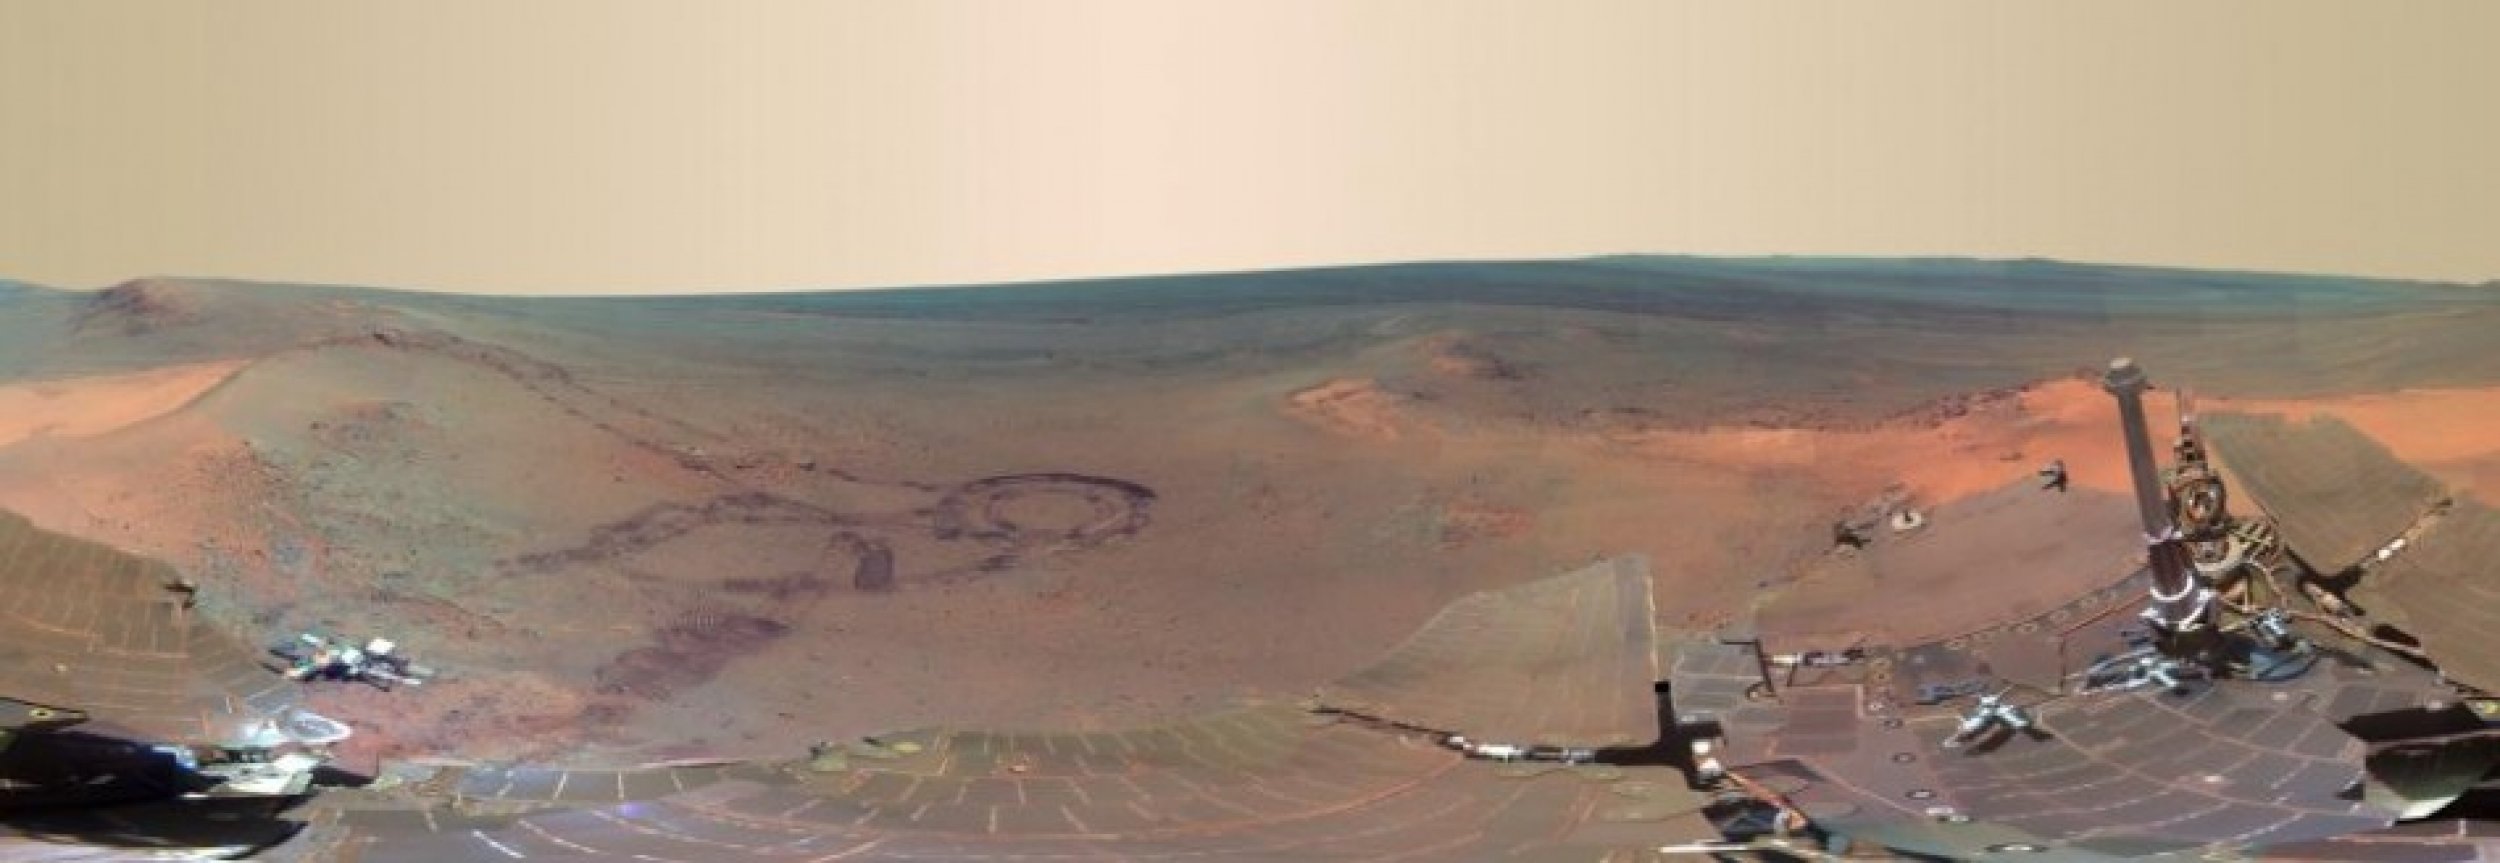 Mars Panorama Greeley Panorama